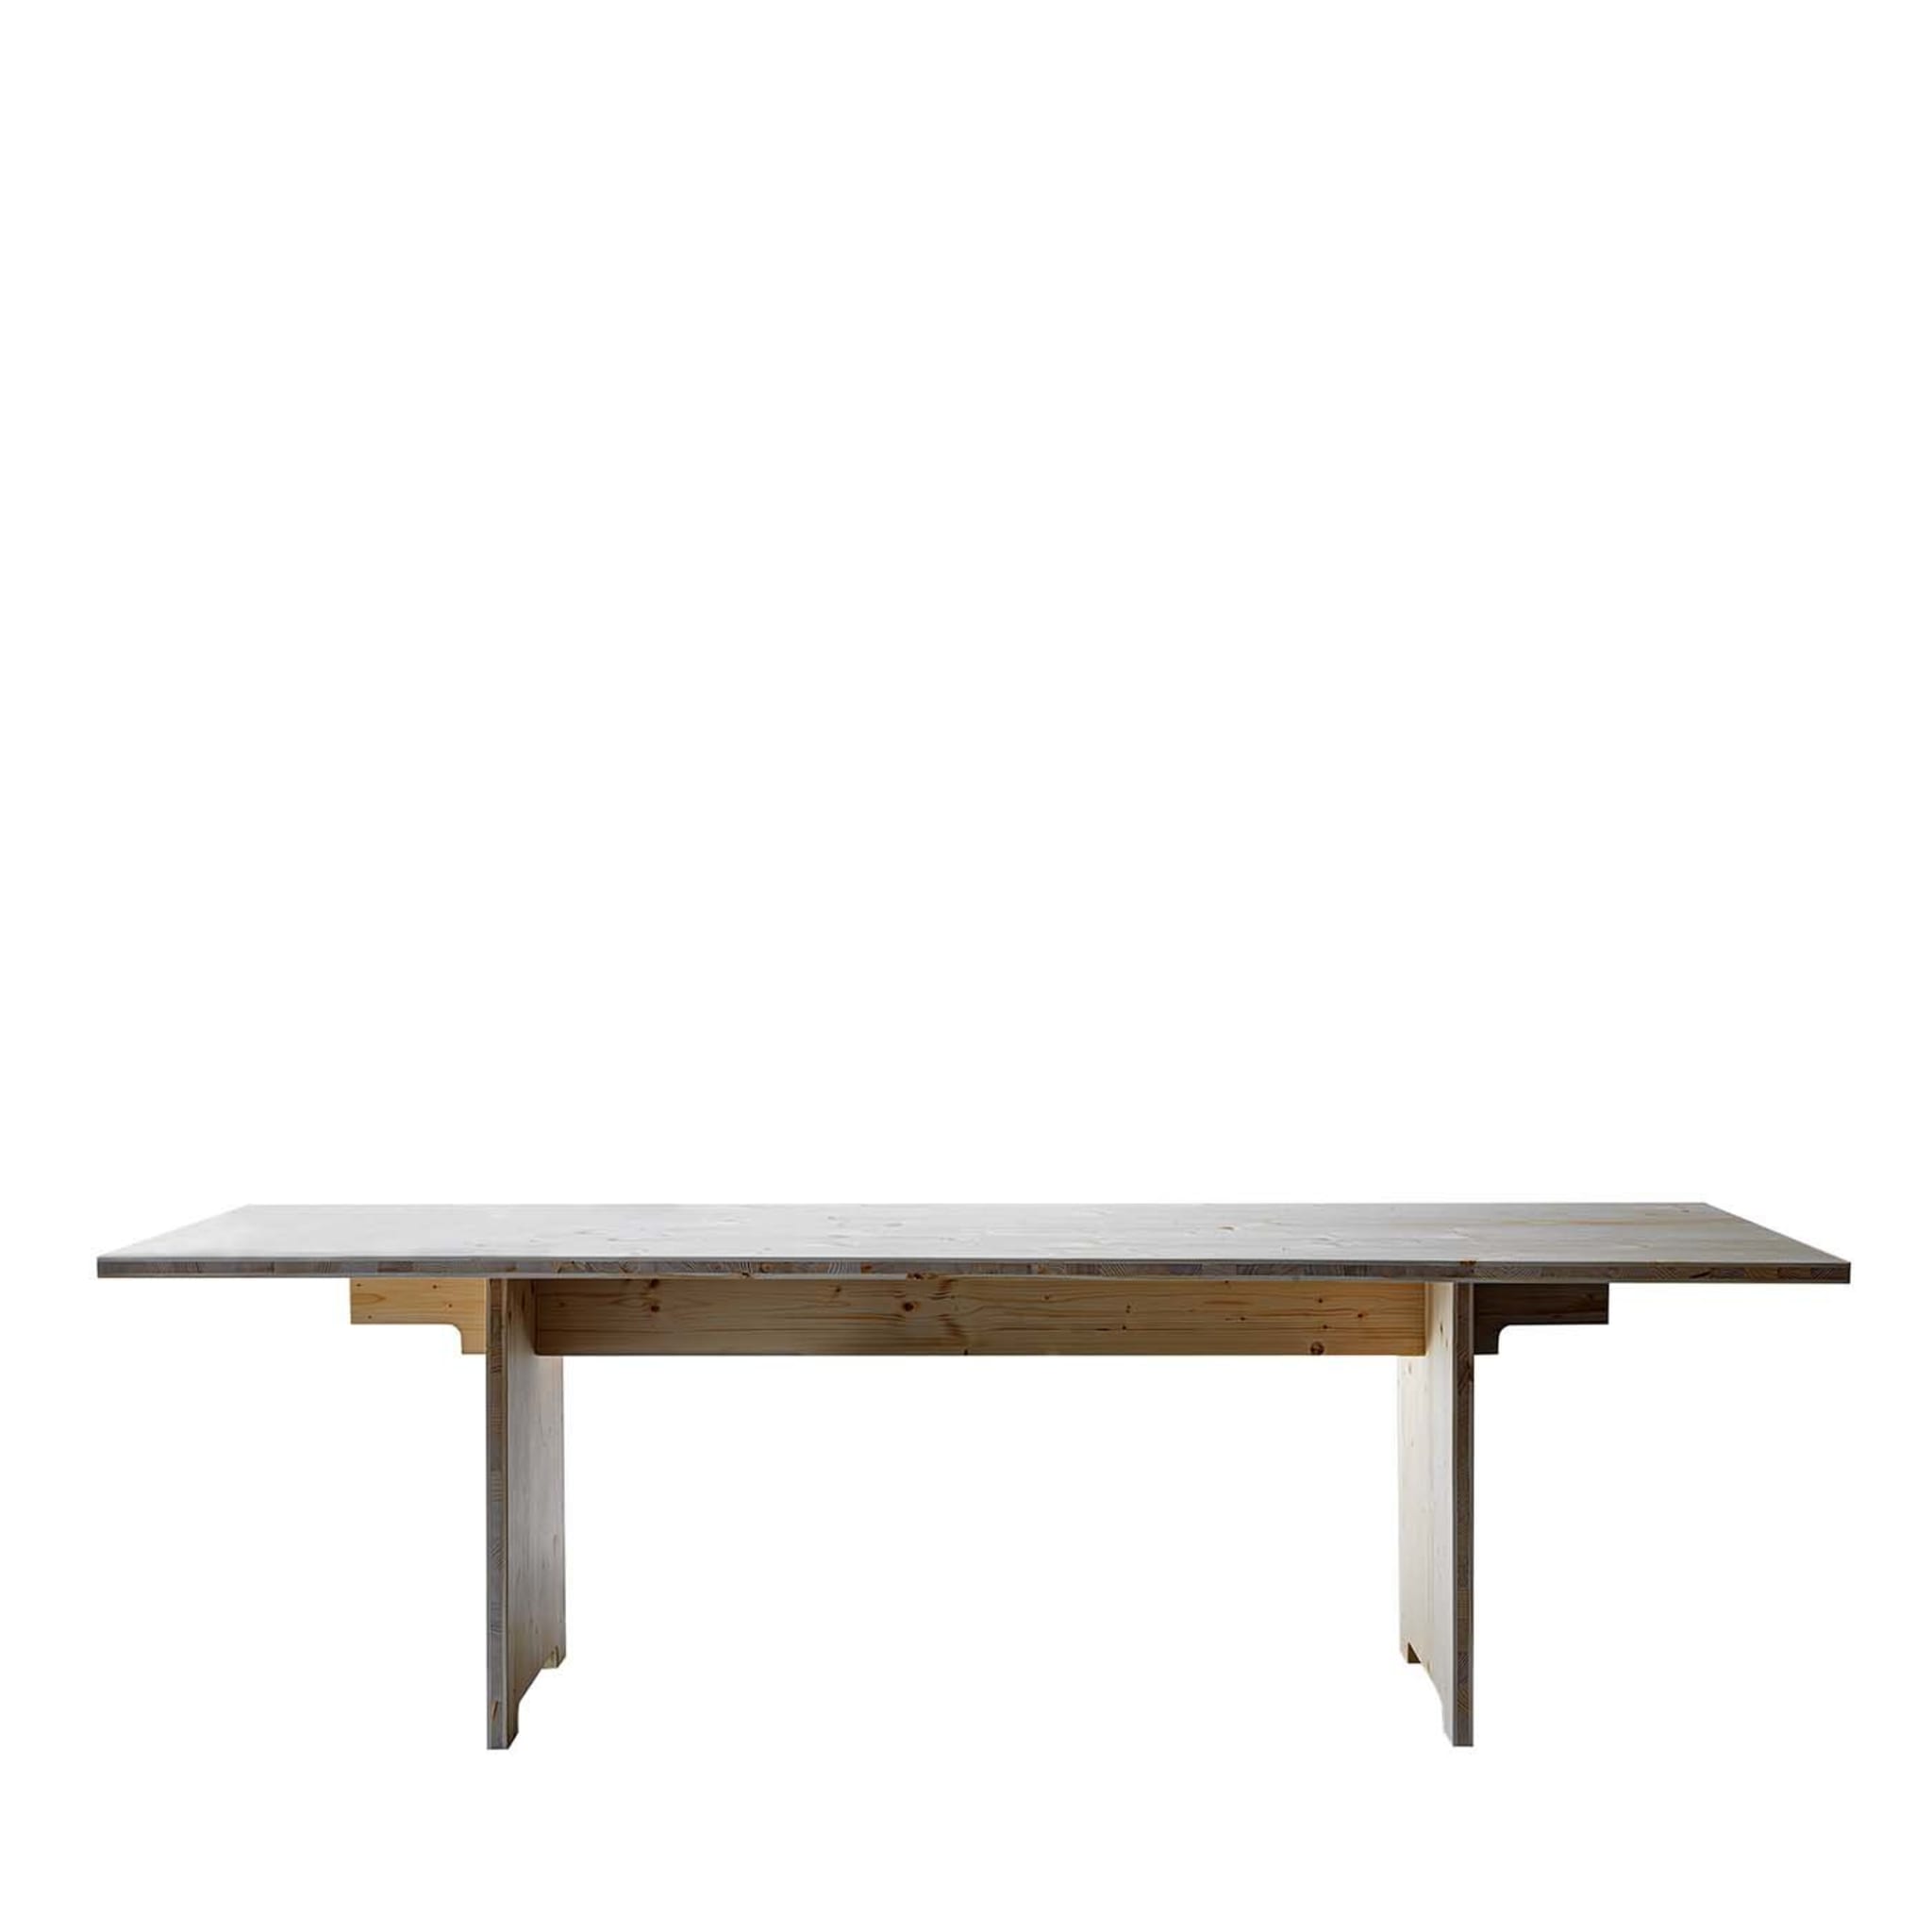 Tino Table by Pasquini Tranfa Architects - Main view